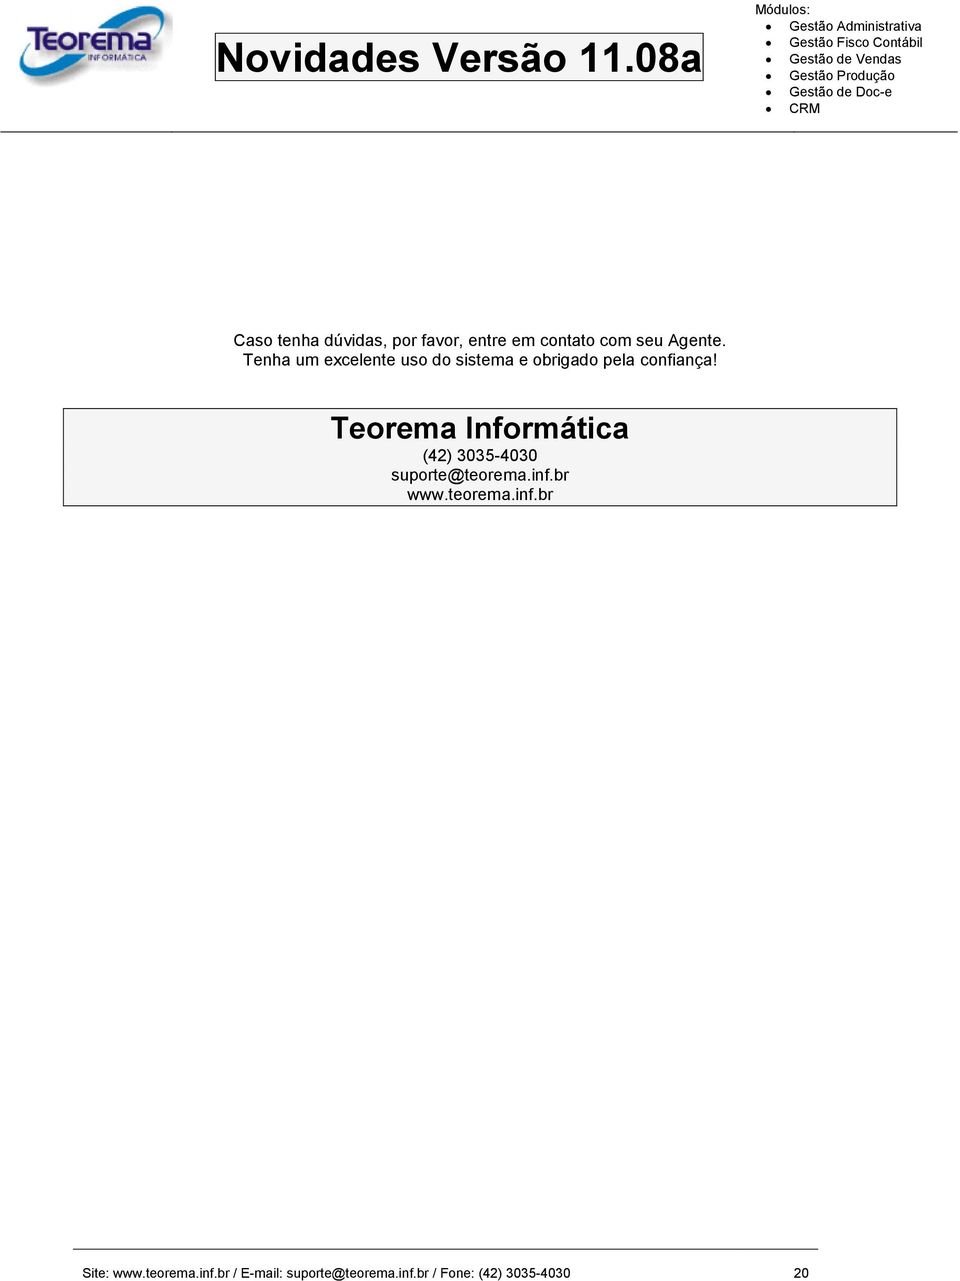 Teorema Informática (42) 3035-4030 suporte@teorema.inf.br www.teorema.inf.br Site: www.